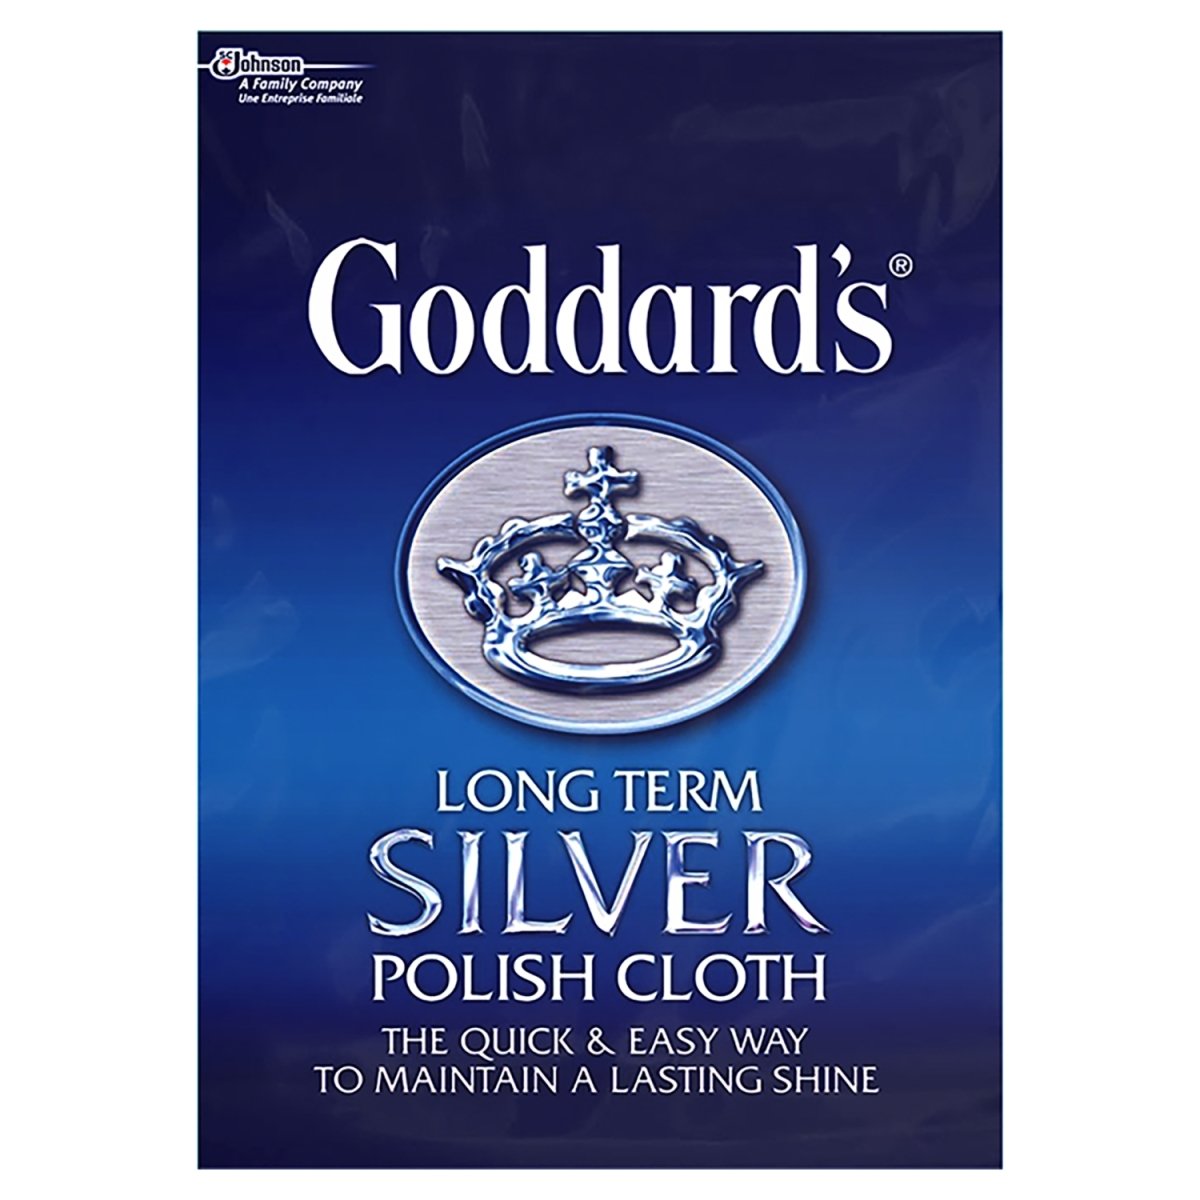  Goddard's Silver Polish, Pack of 2 : Health & Household